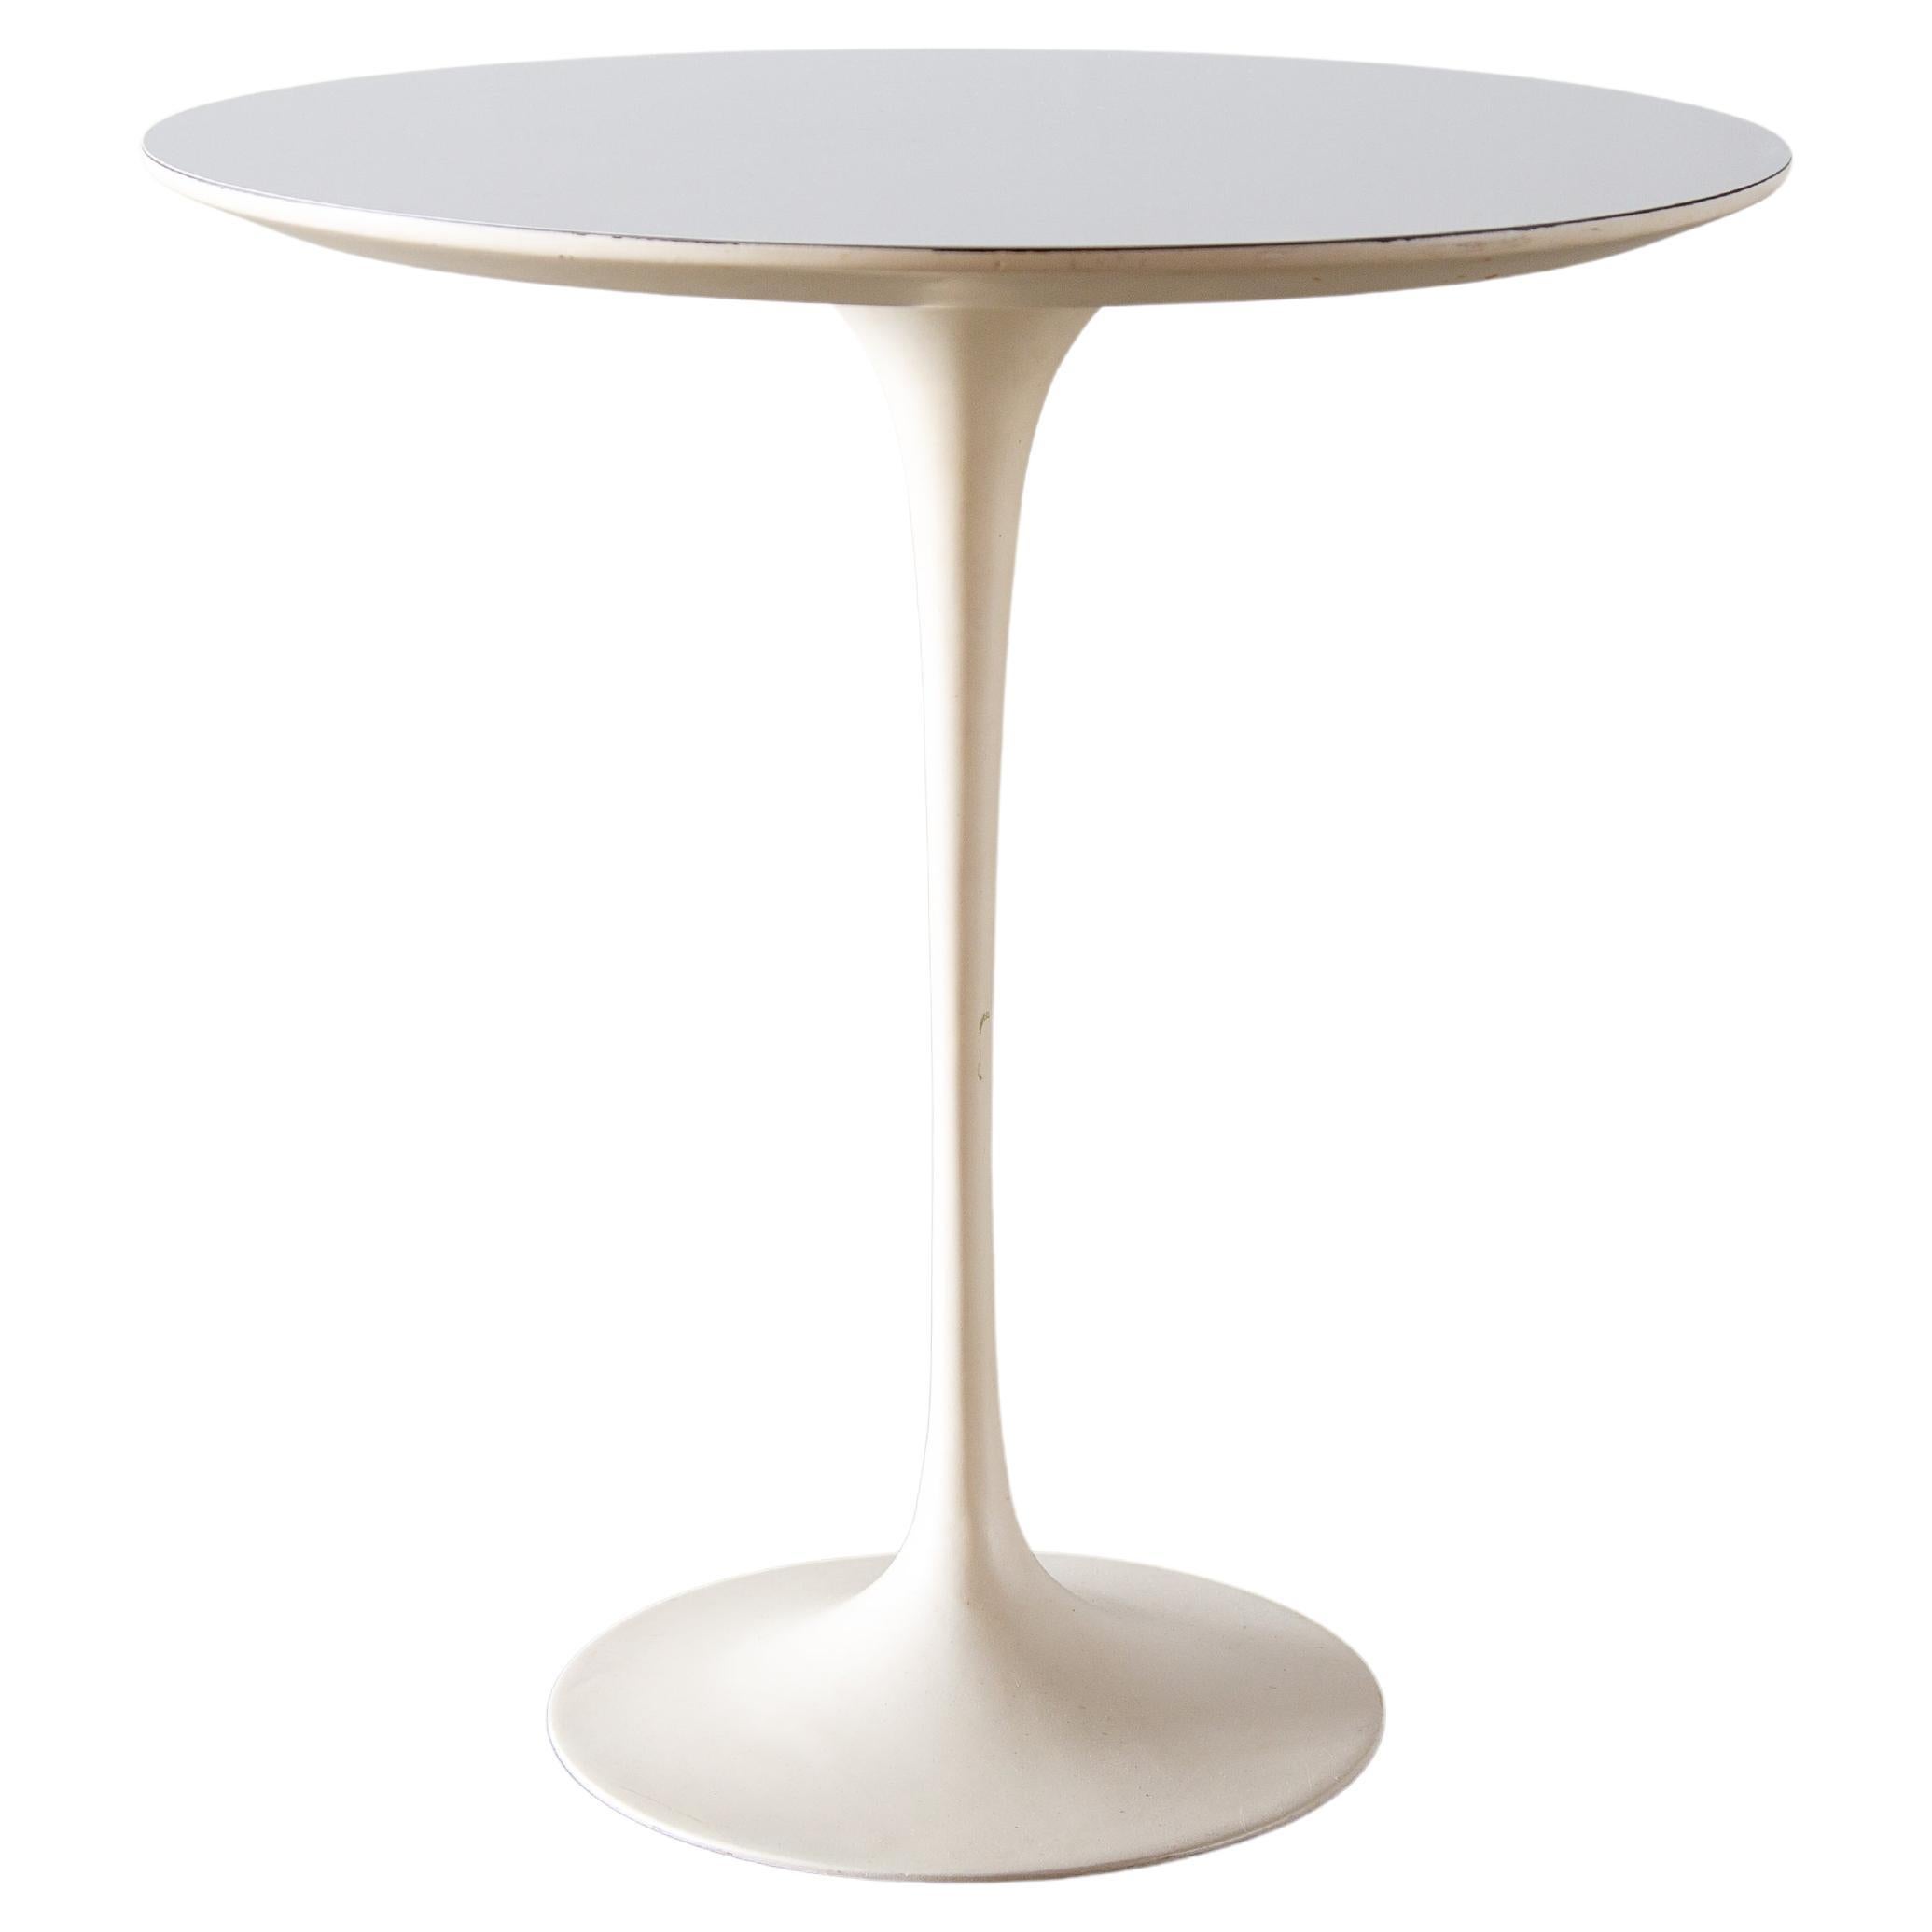 1970s Eero Saarinen for Knoll Tulip Side table 20" white laminate top